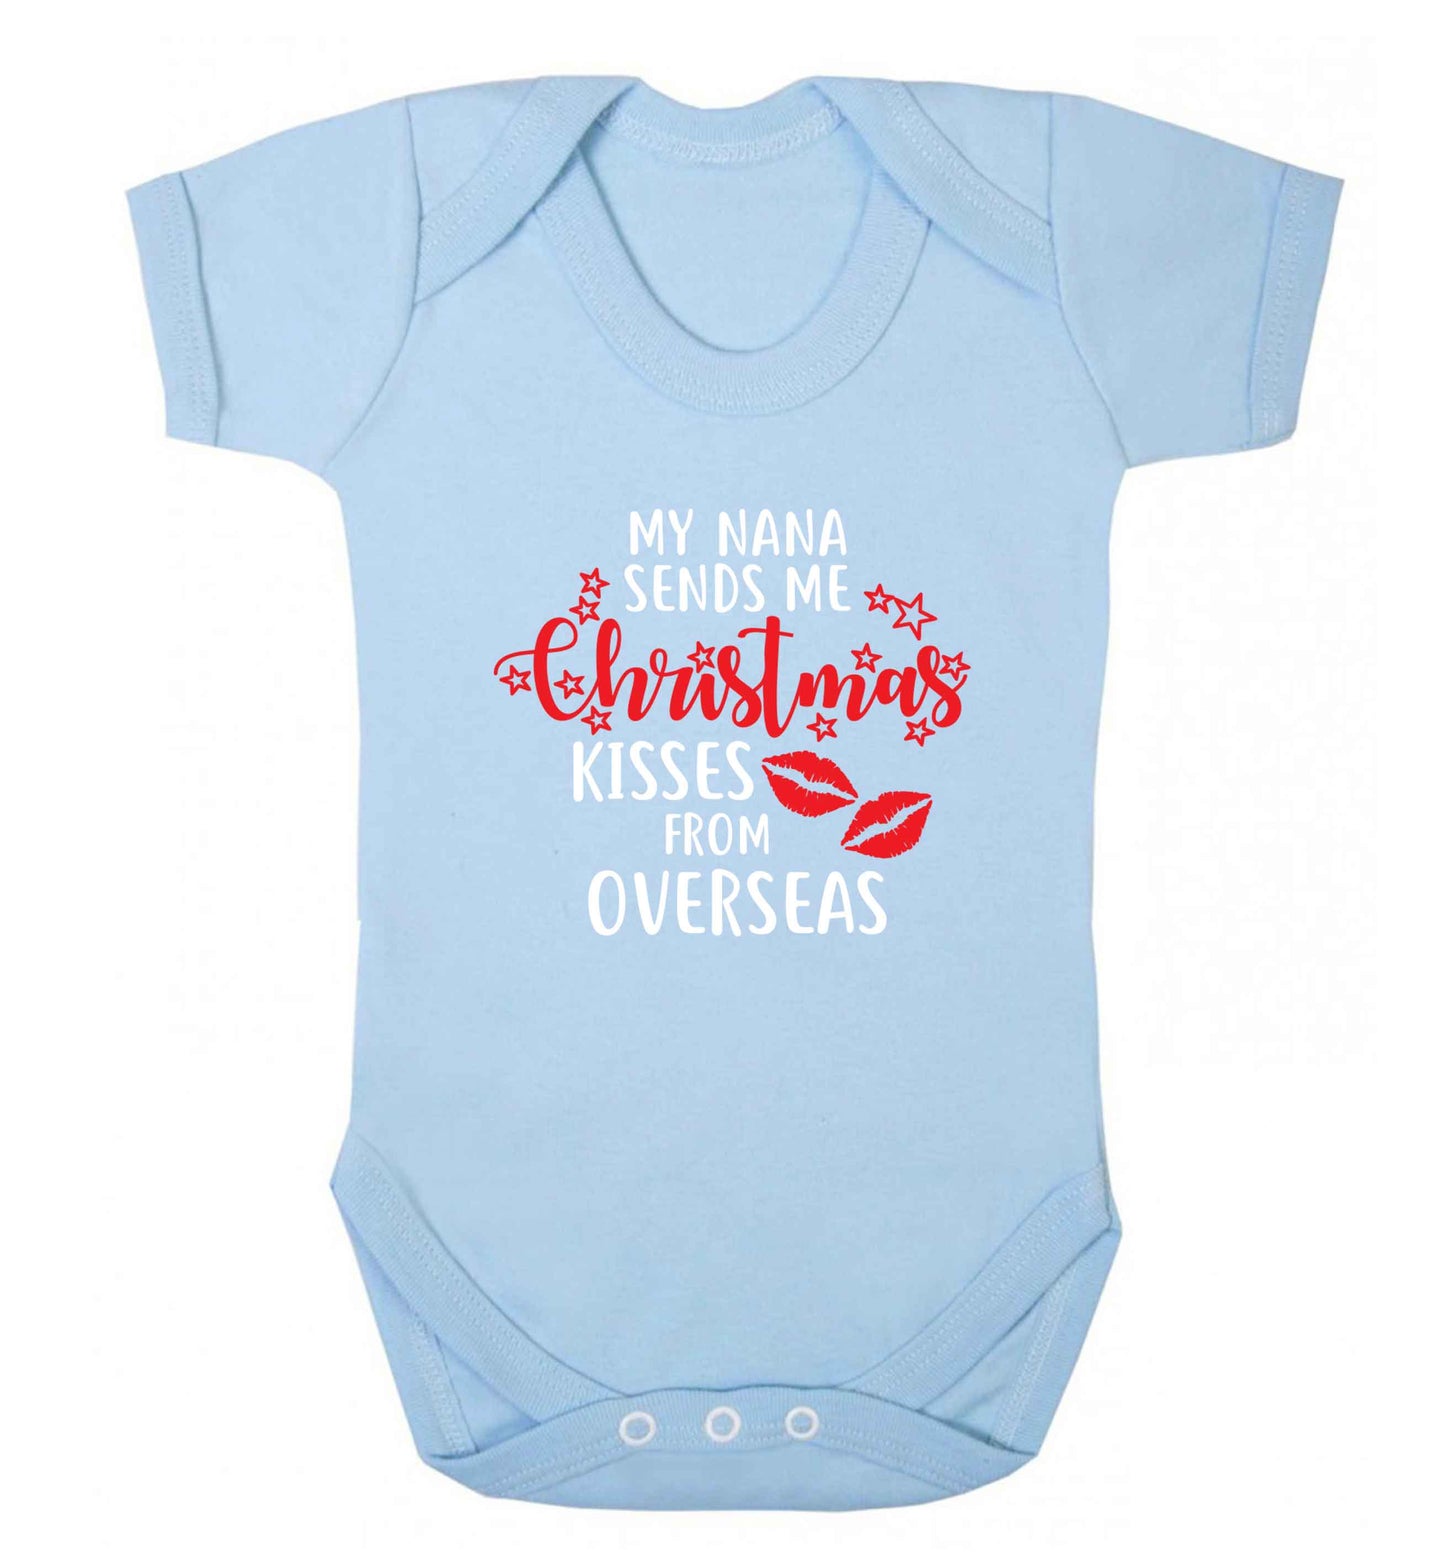 Grandma Christmas Kisses Overseas baby vest pale blue 18-24 months